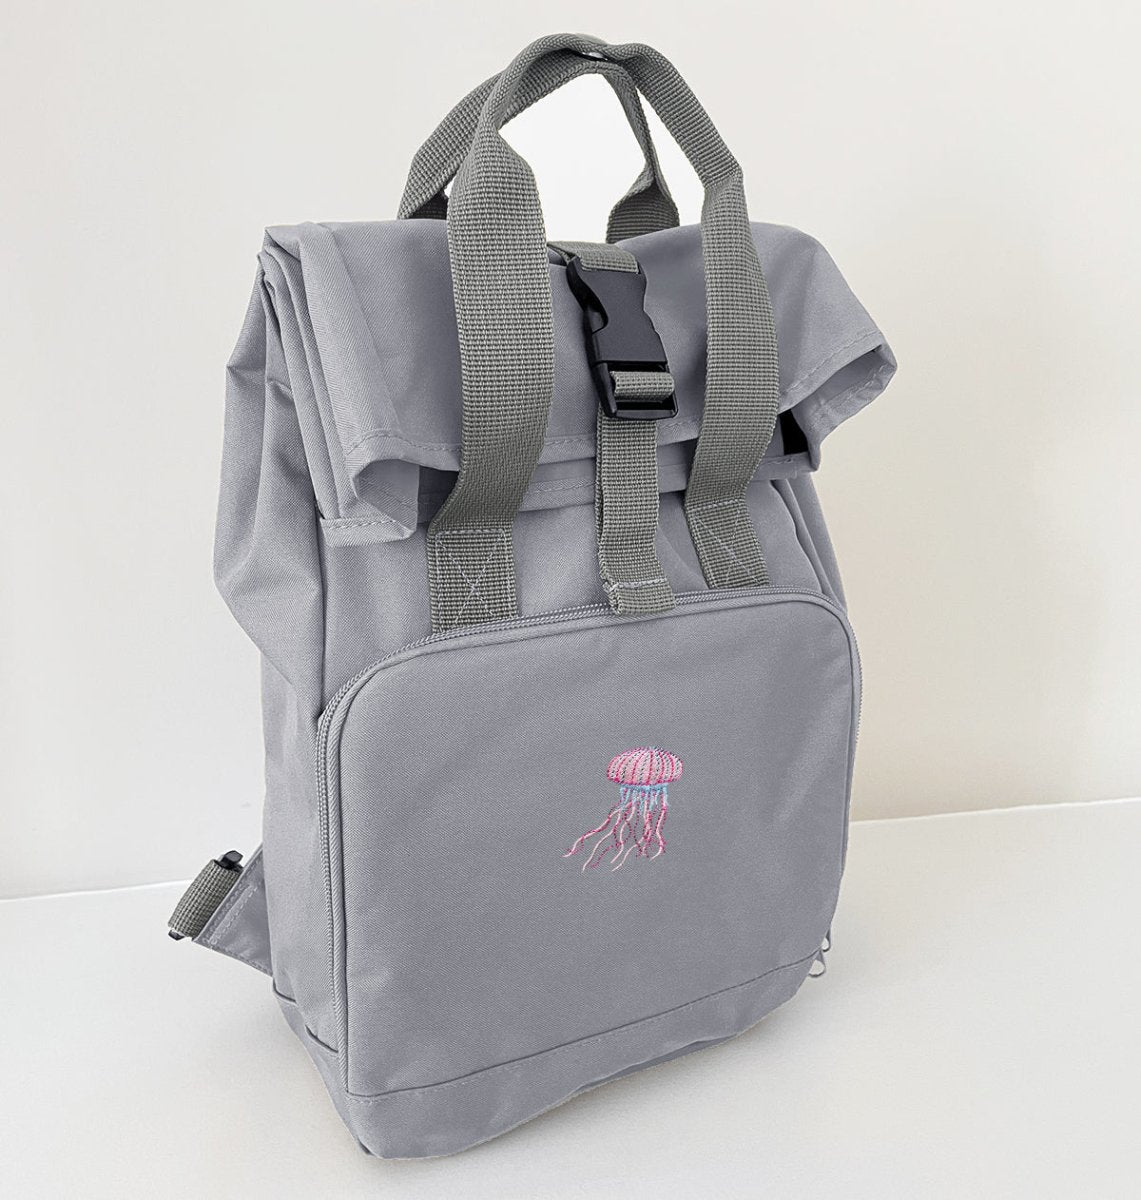 Jellyfish Mini Roll-top Recycled Backpack - Blue Panda